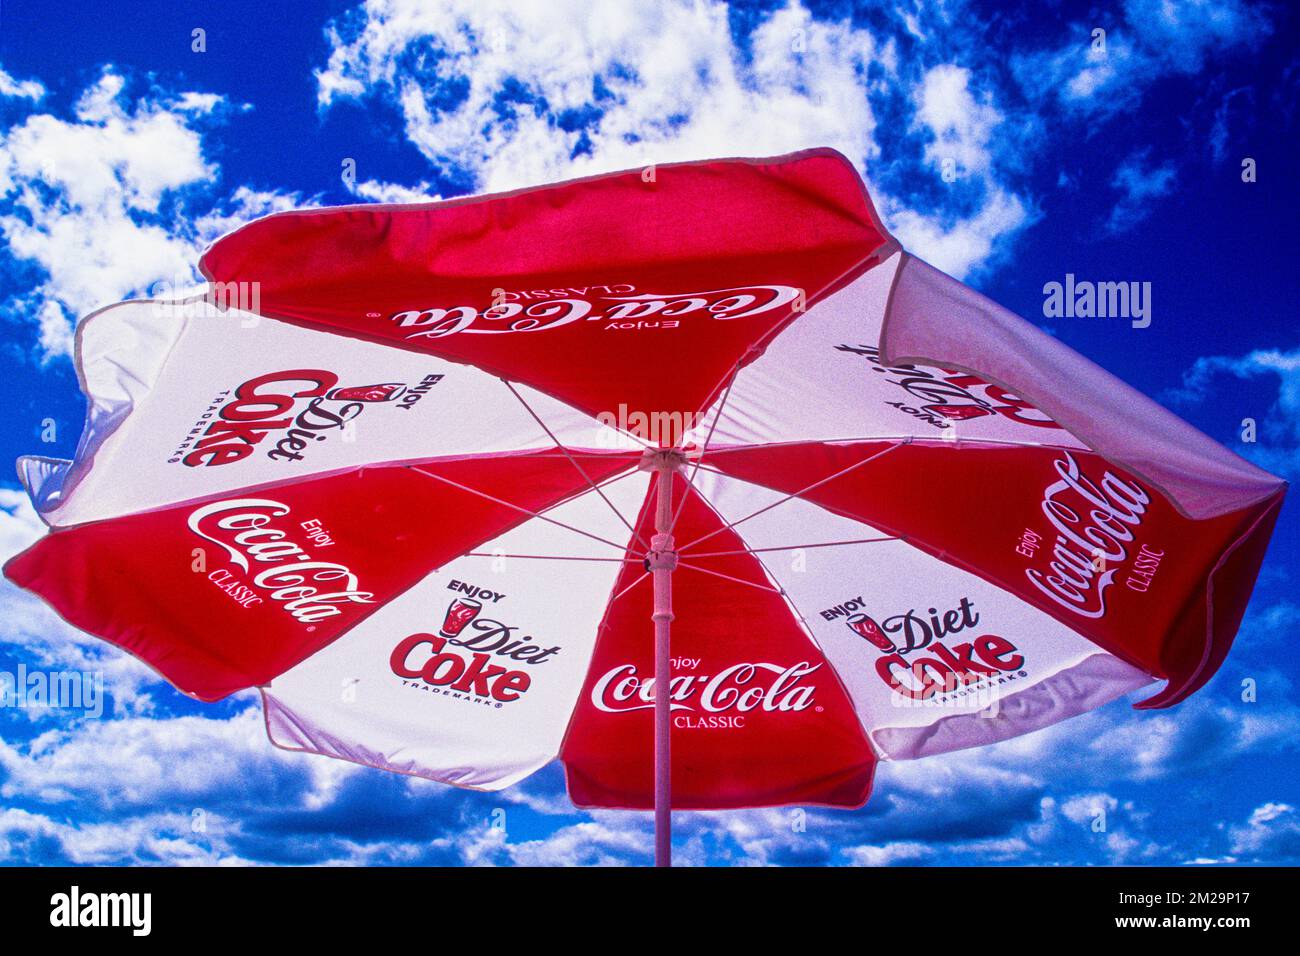 Roter coca cola regenschirm -Fotos und -Bildmaterial in hoher Auflösung –  Alamy